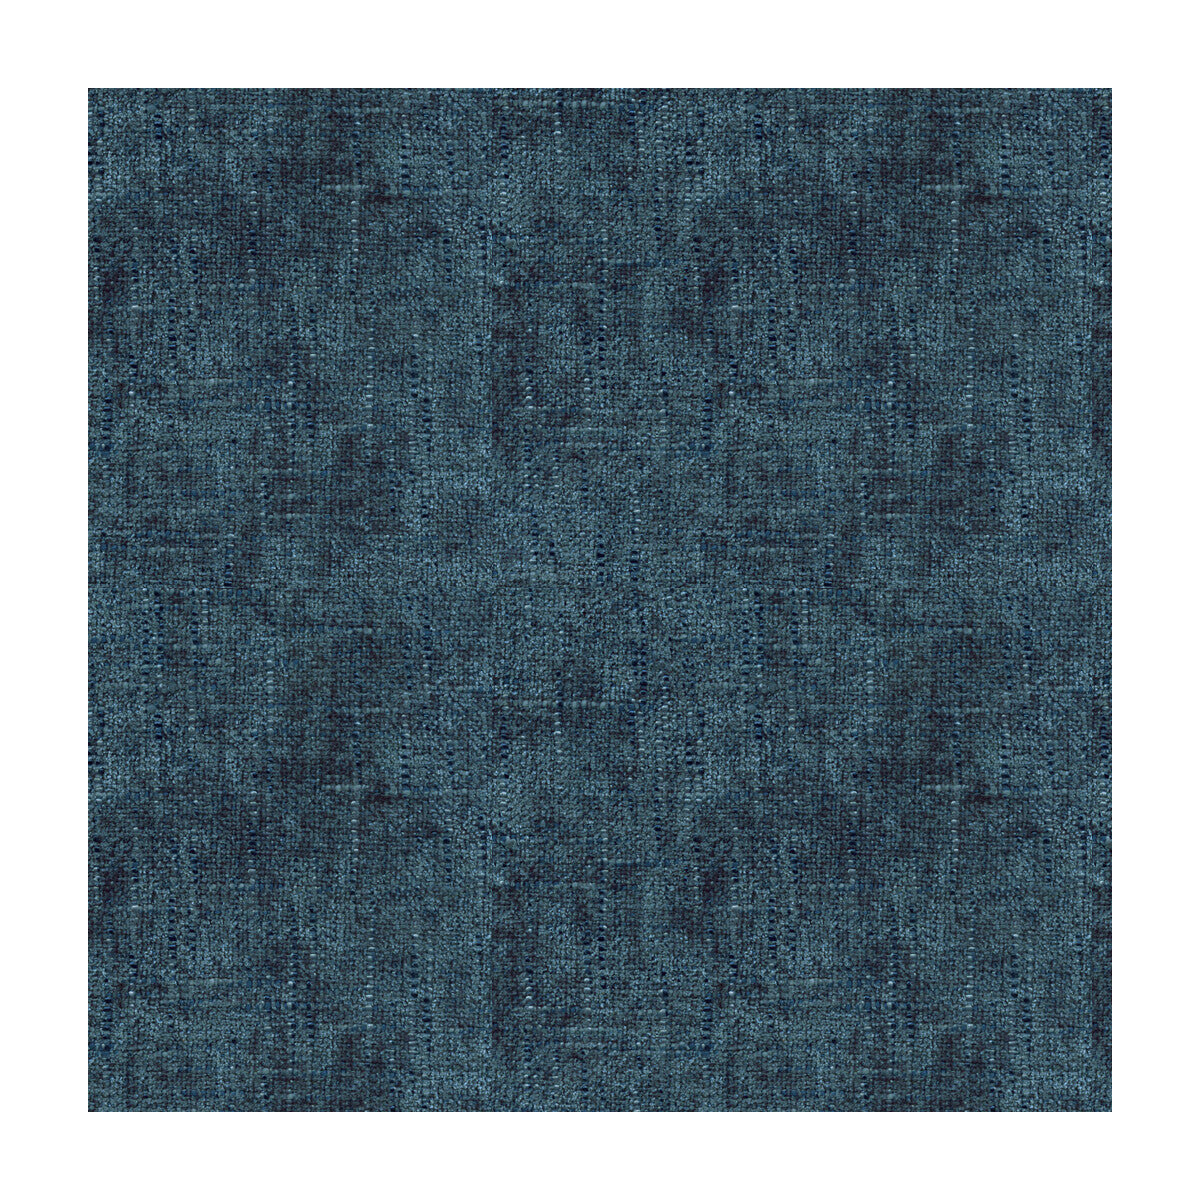 Kravet Smart fabric in 33563-5 color - pattern 33563.5.0 - by Kravet Smart